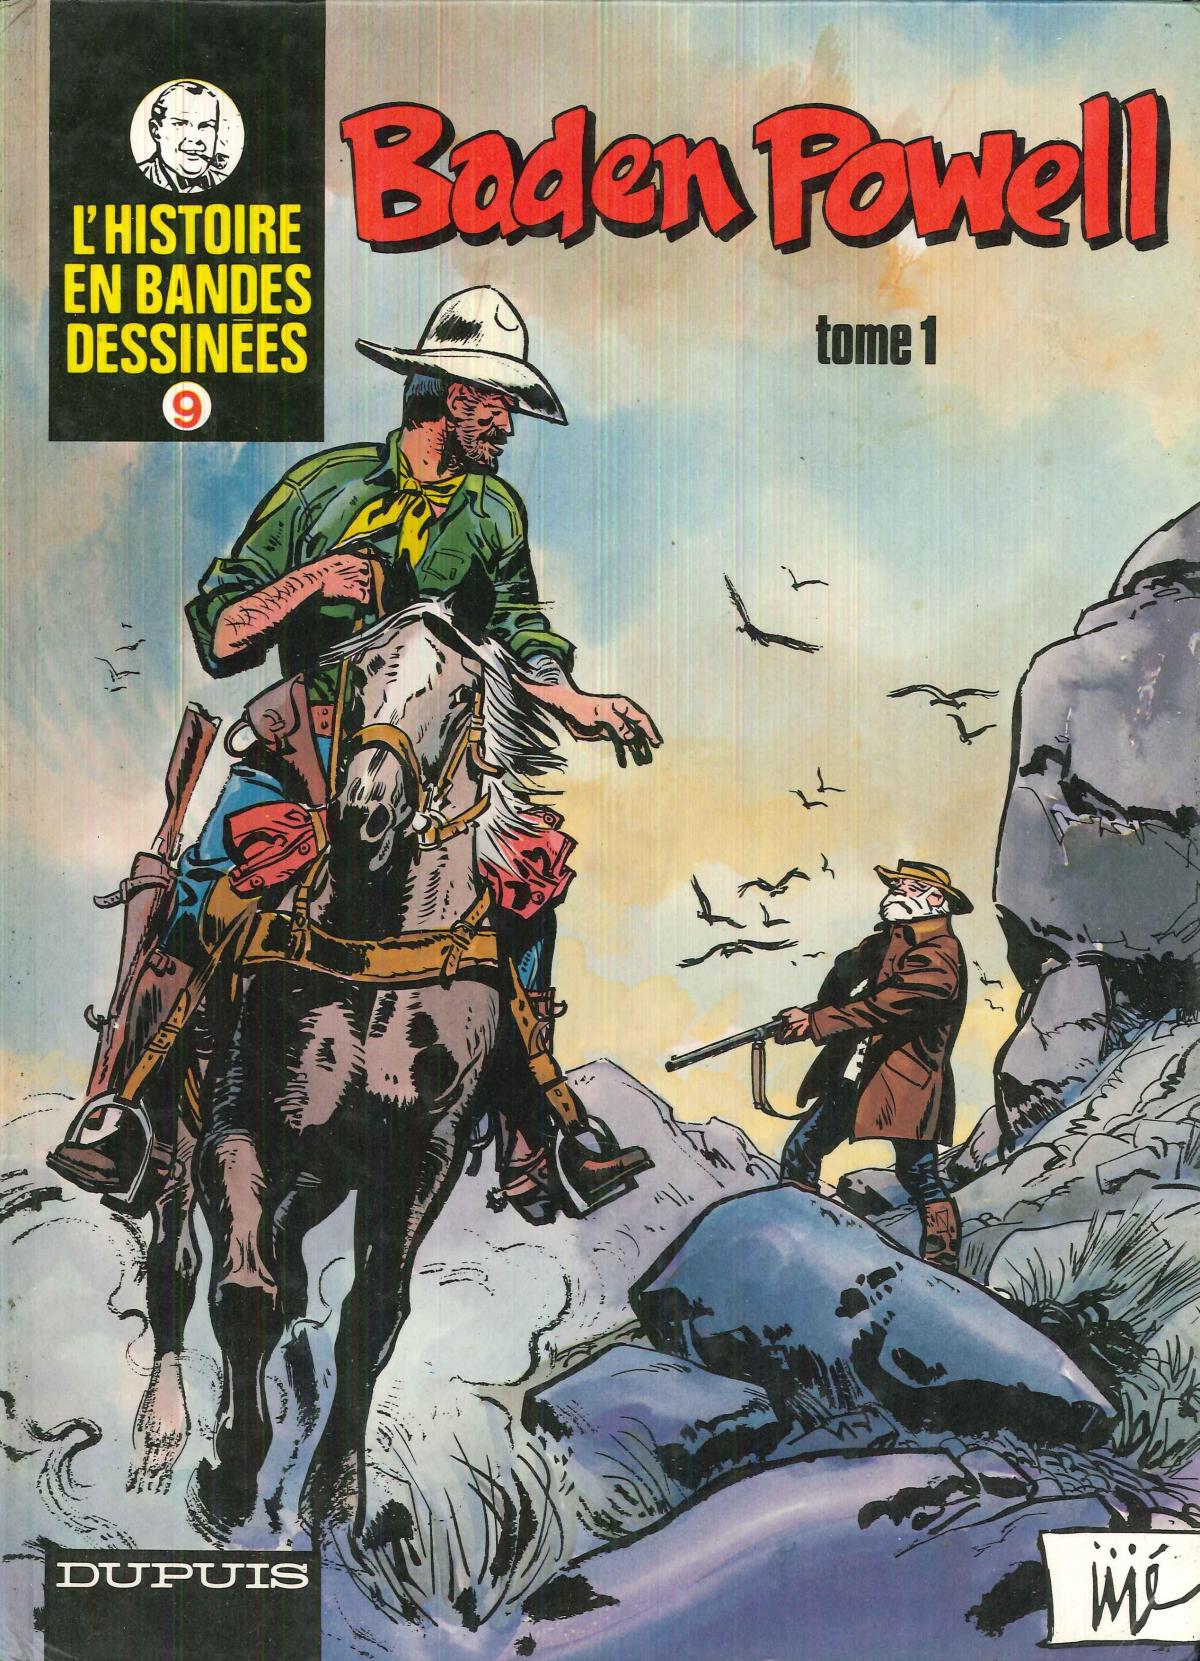 Baden Powell, Histoire en bandes dessinées n°9